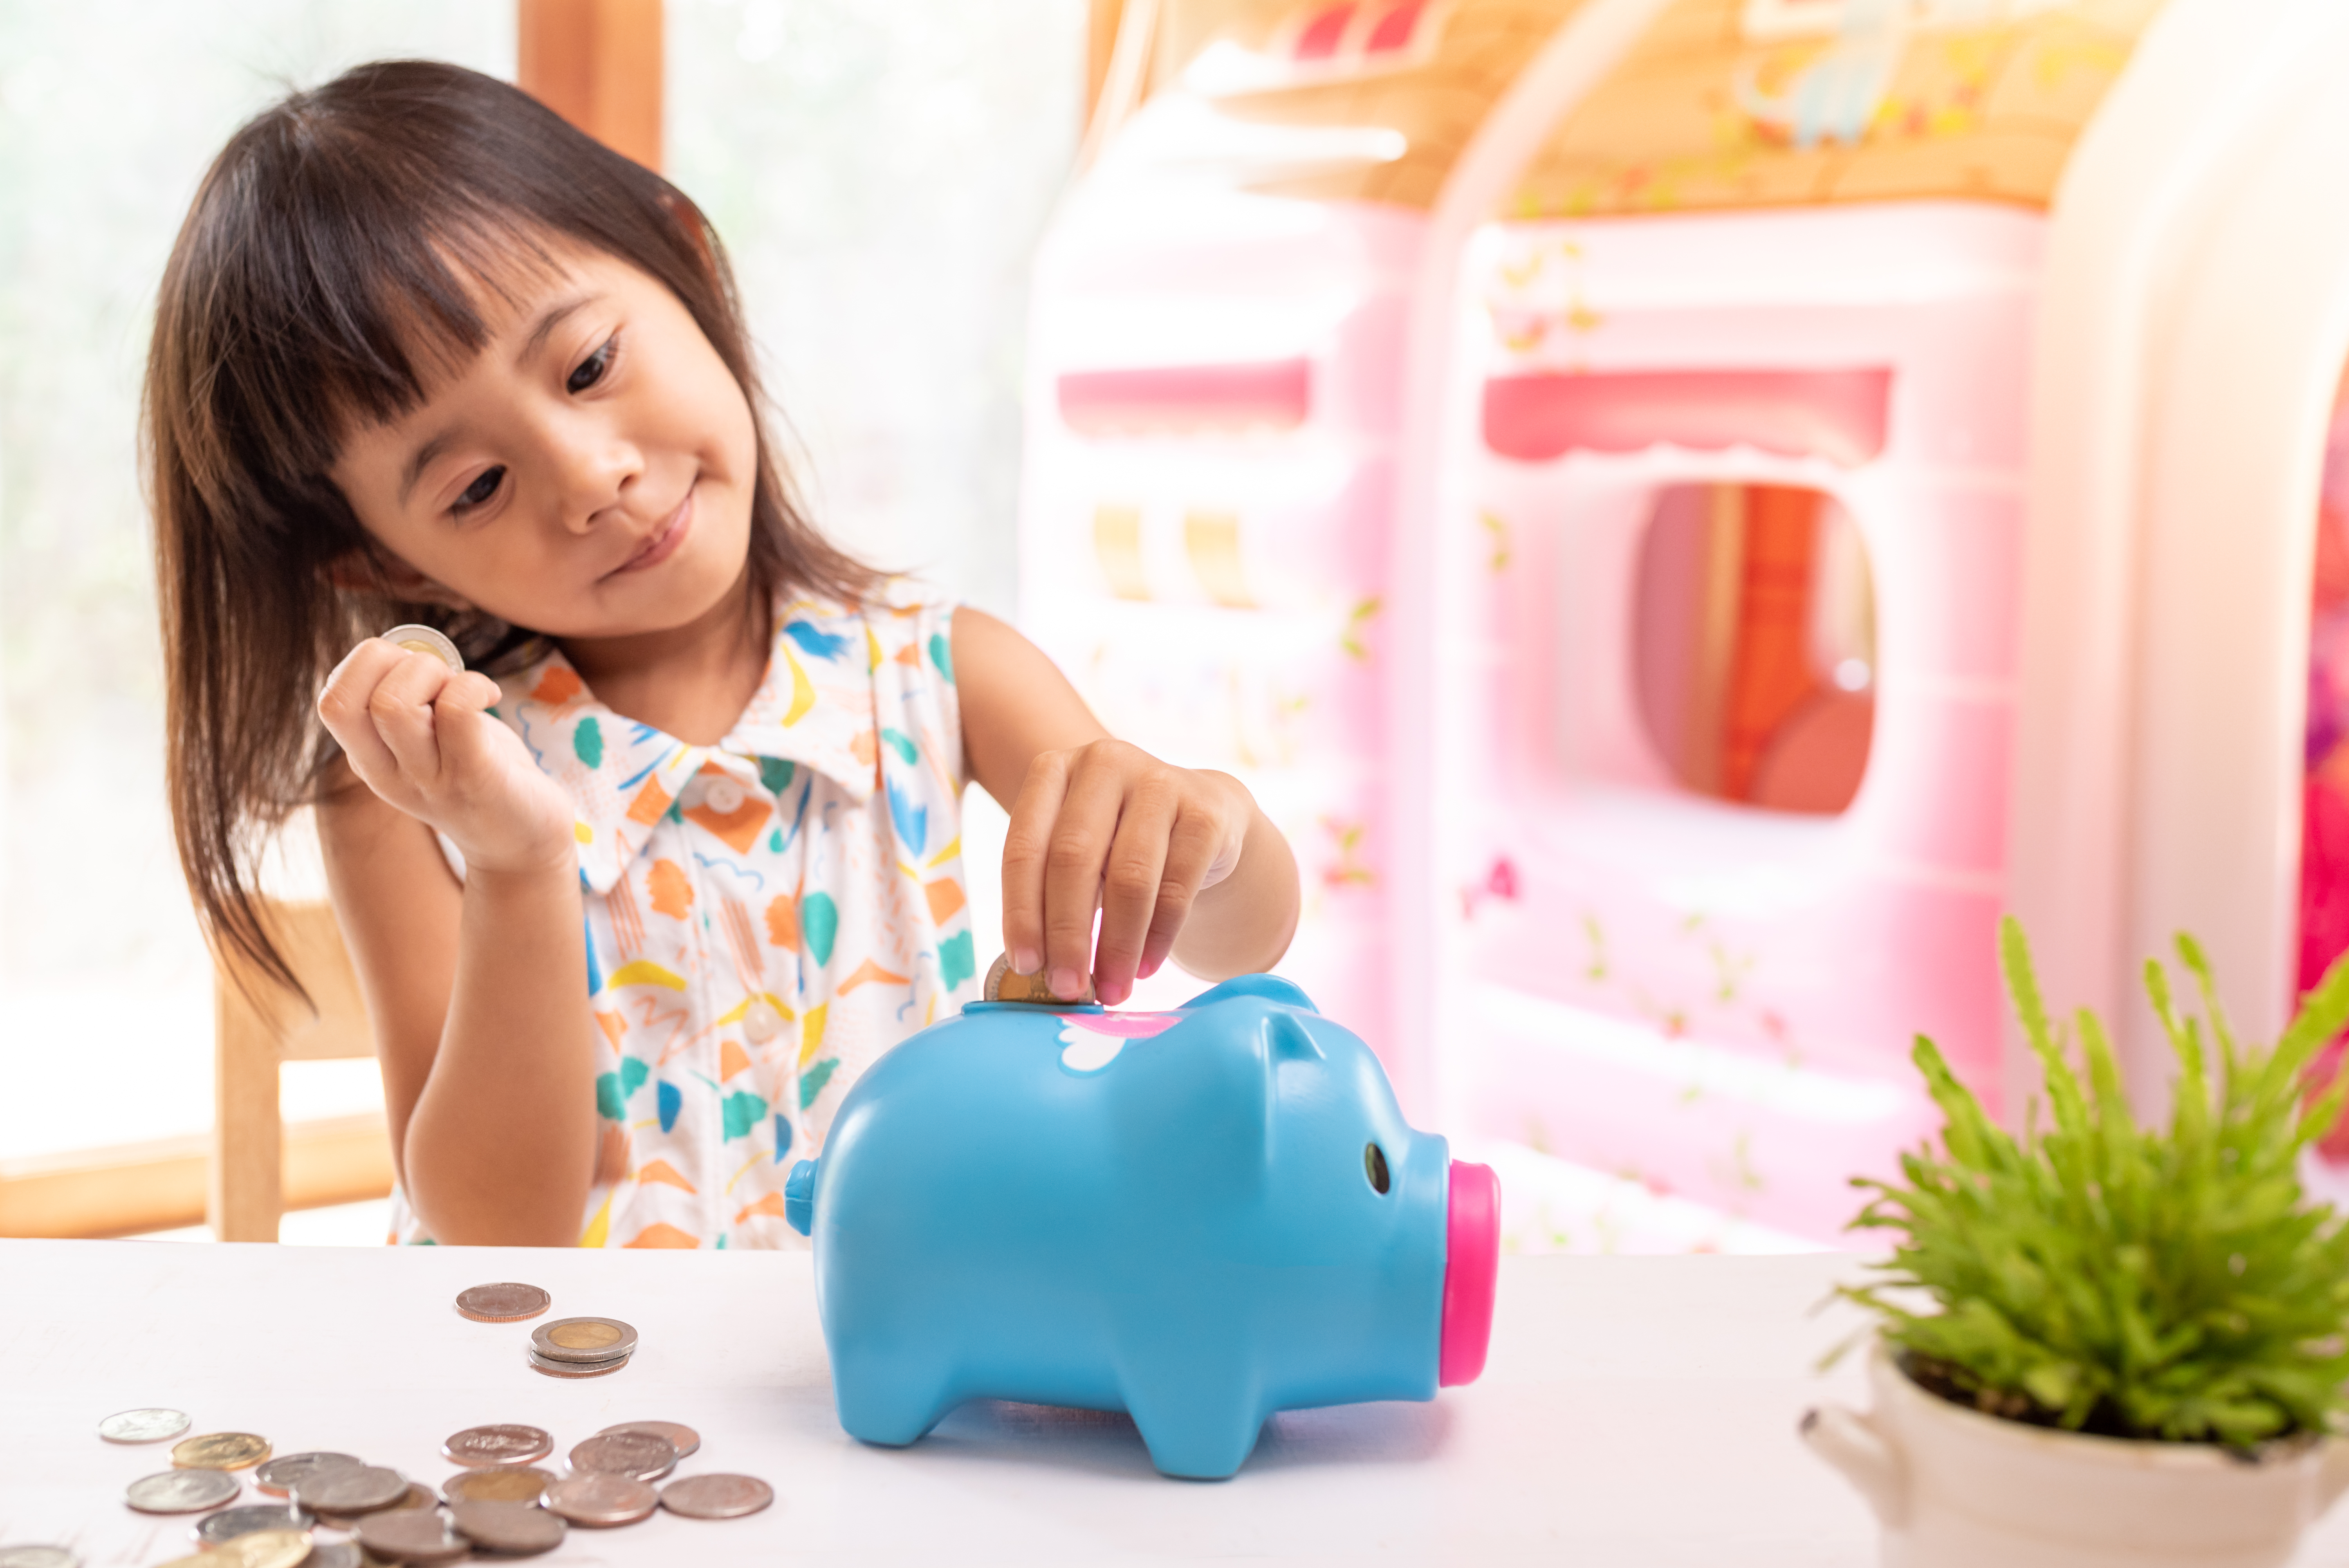 Female child putting money in blue piggy bank